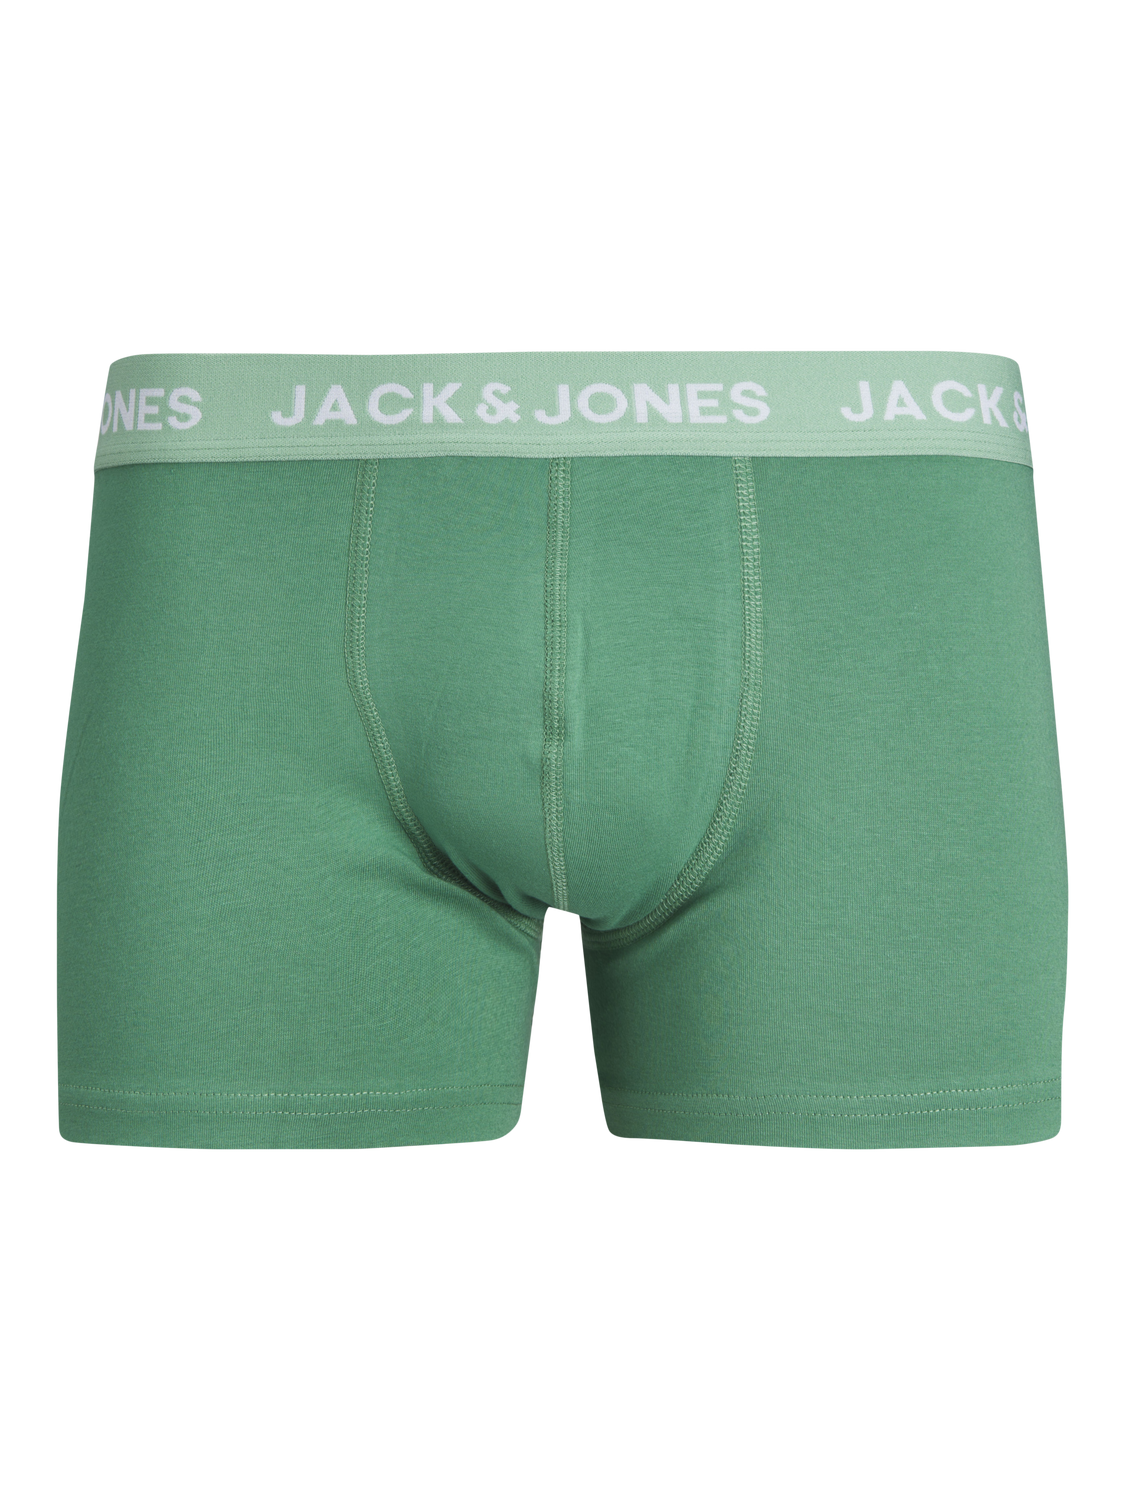 Jack & Jones Plus Size 5-pack Trunks -Tango Red - 12261440